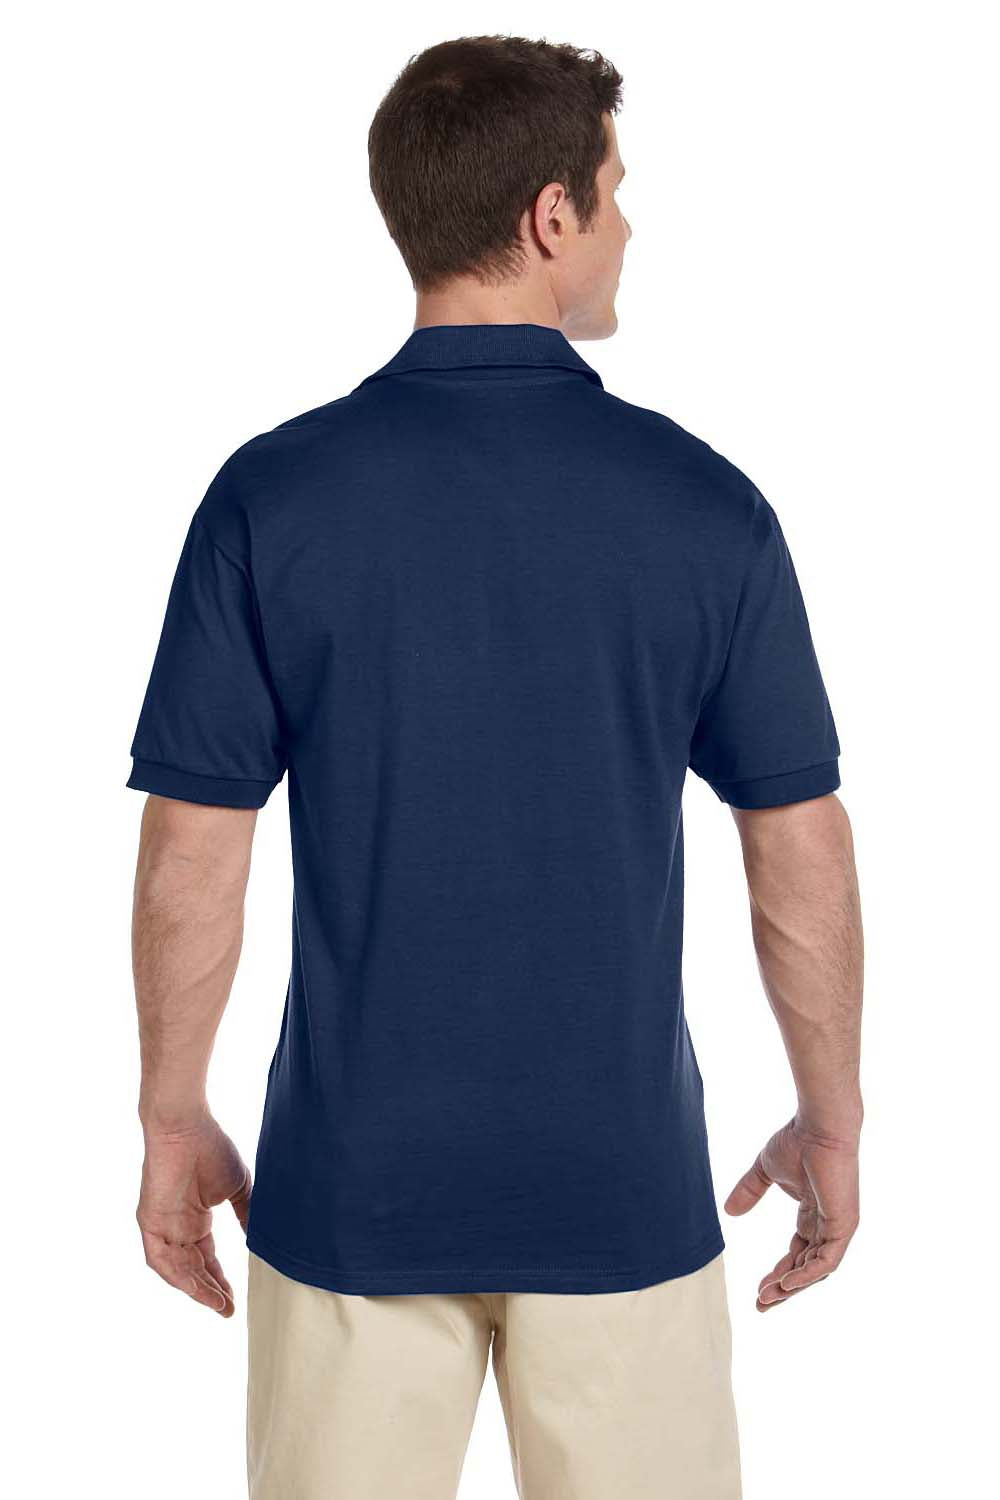 Jerzees J100 Mens Short Sleeve Polo Shirt Navy Blue Back